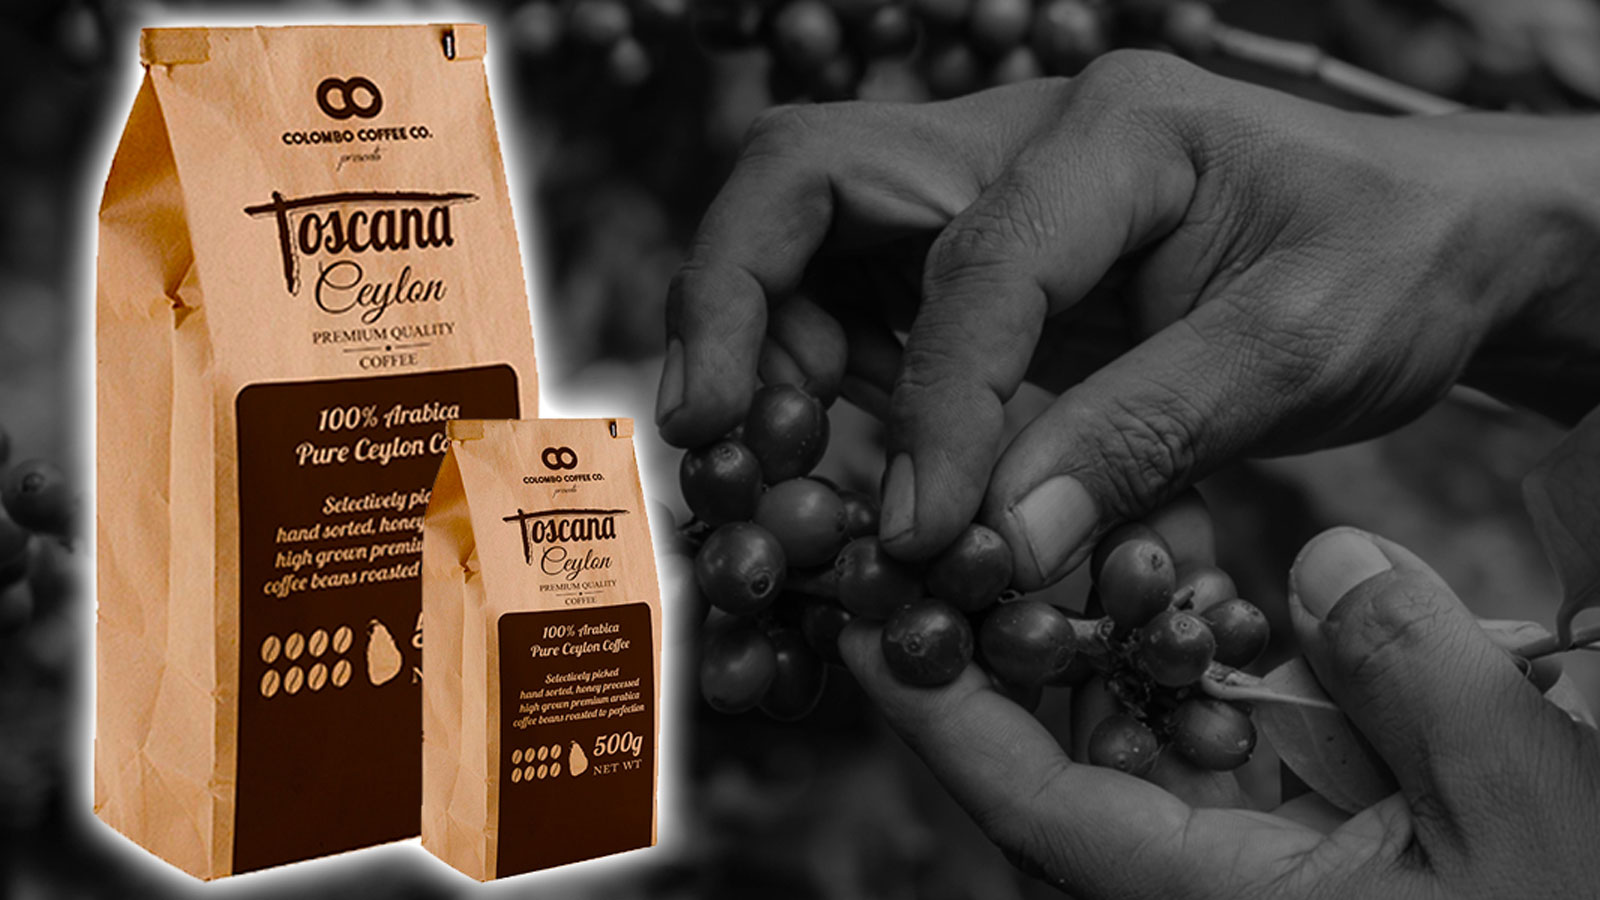 COLOMBO COFFEE COMPANY PVT LTD